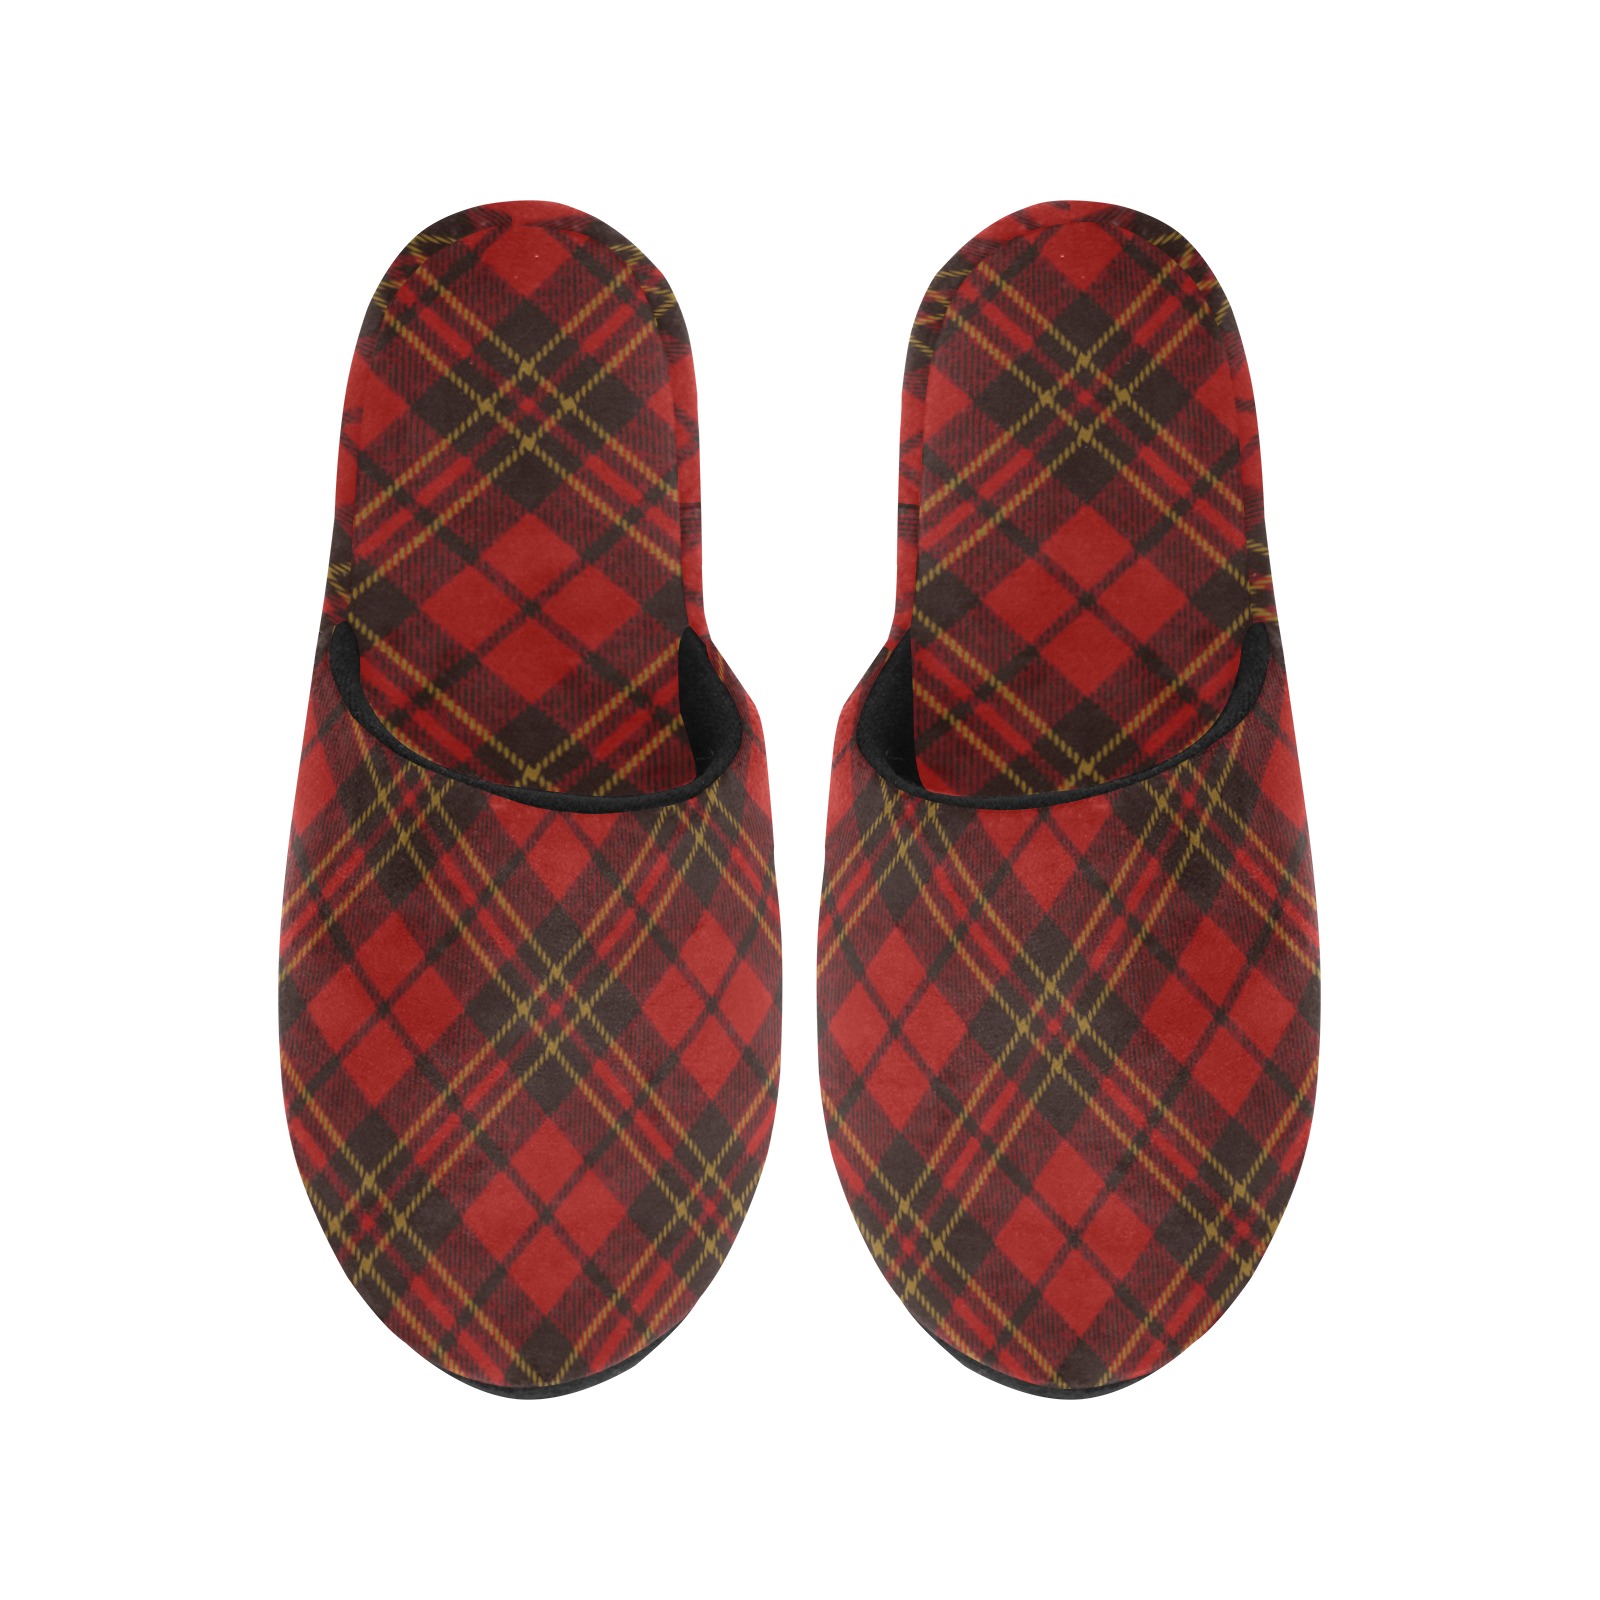 Red tartan plaid winter Christmas pattern holidays Men's Cotton Slippers (Model 0601)